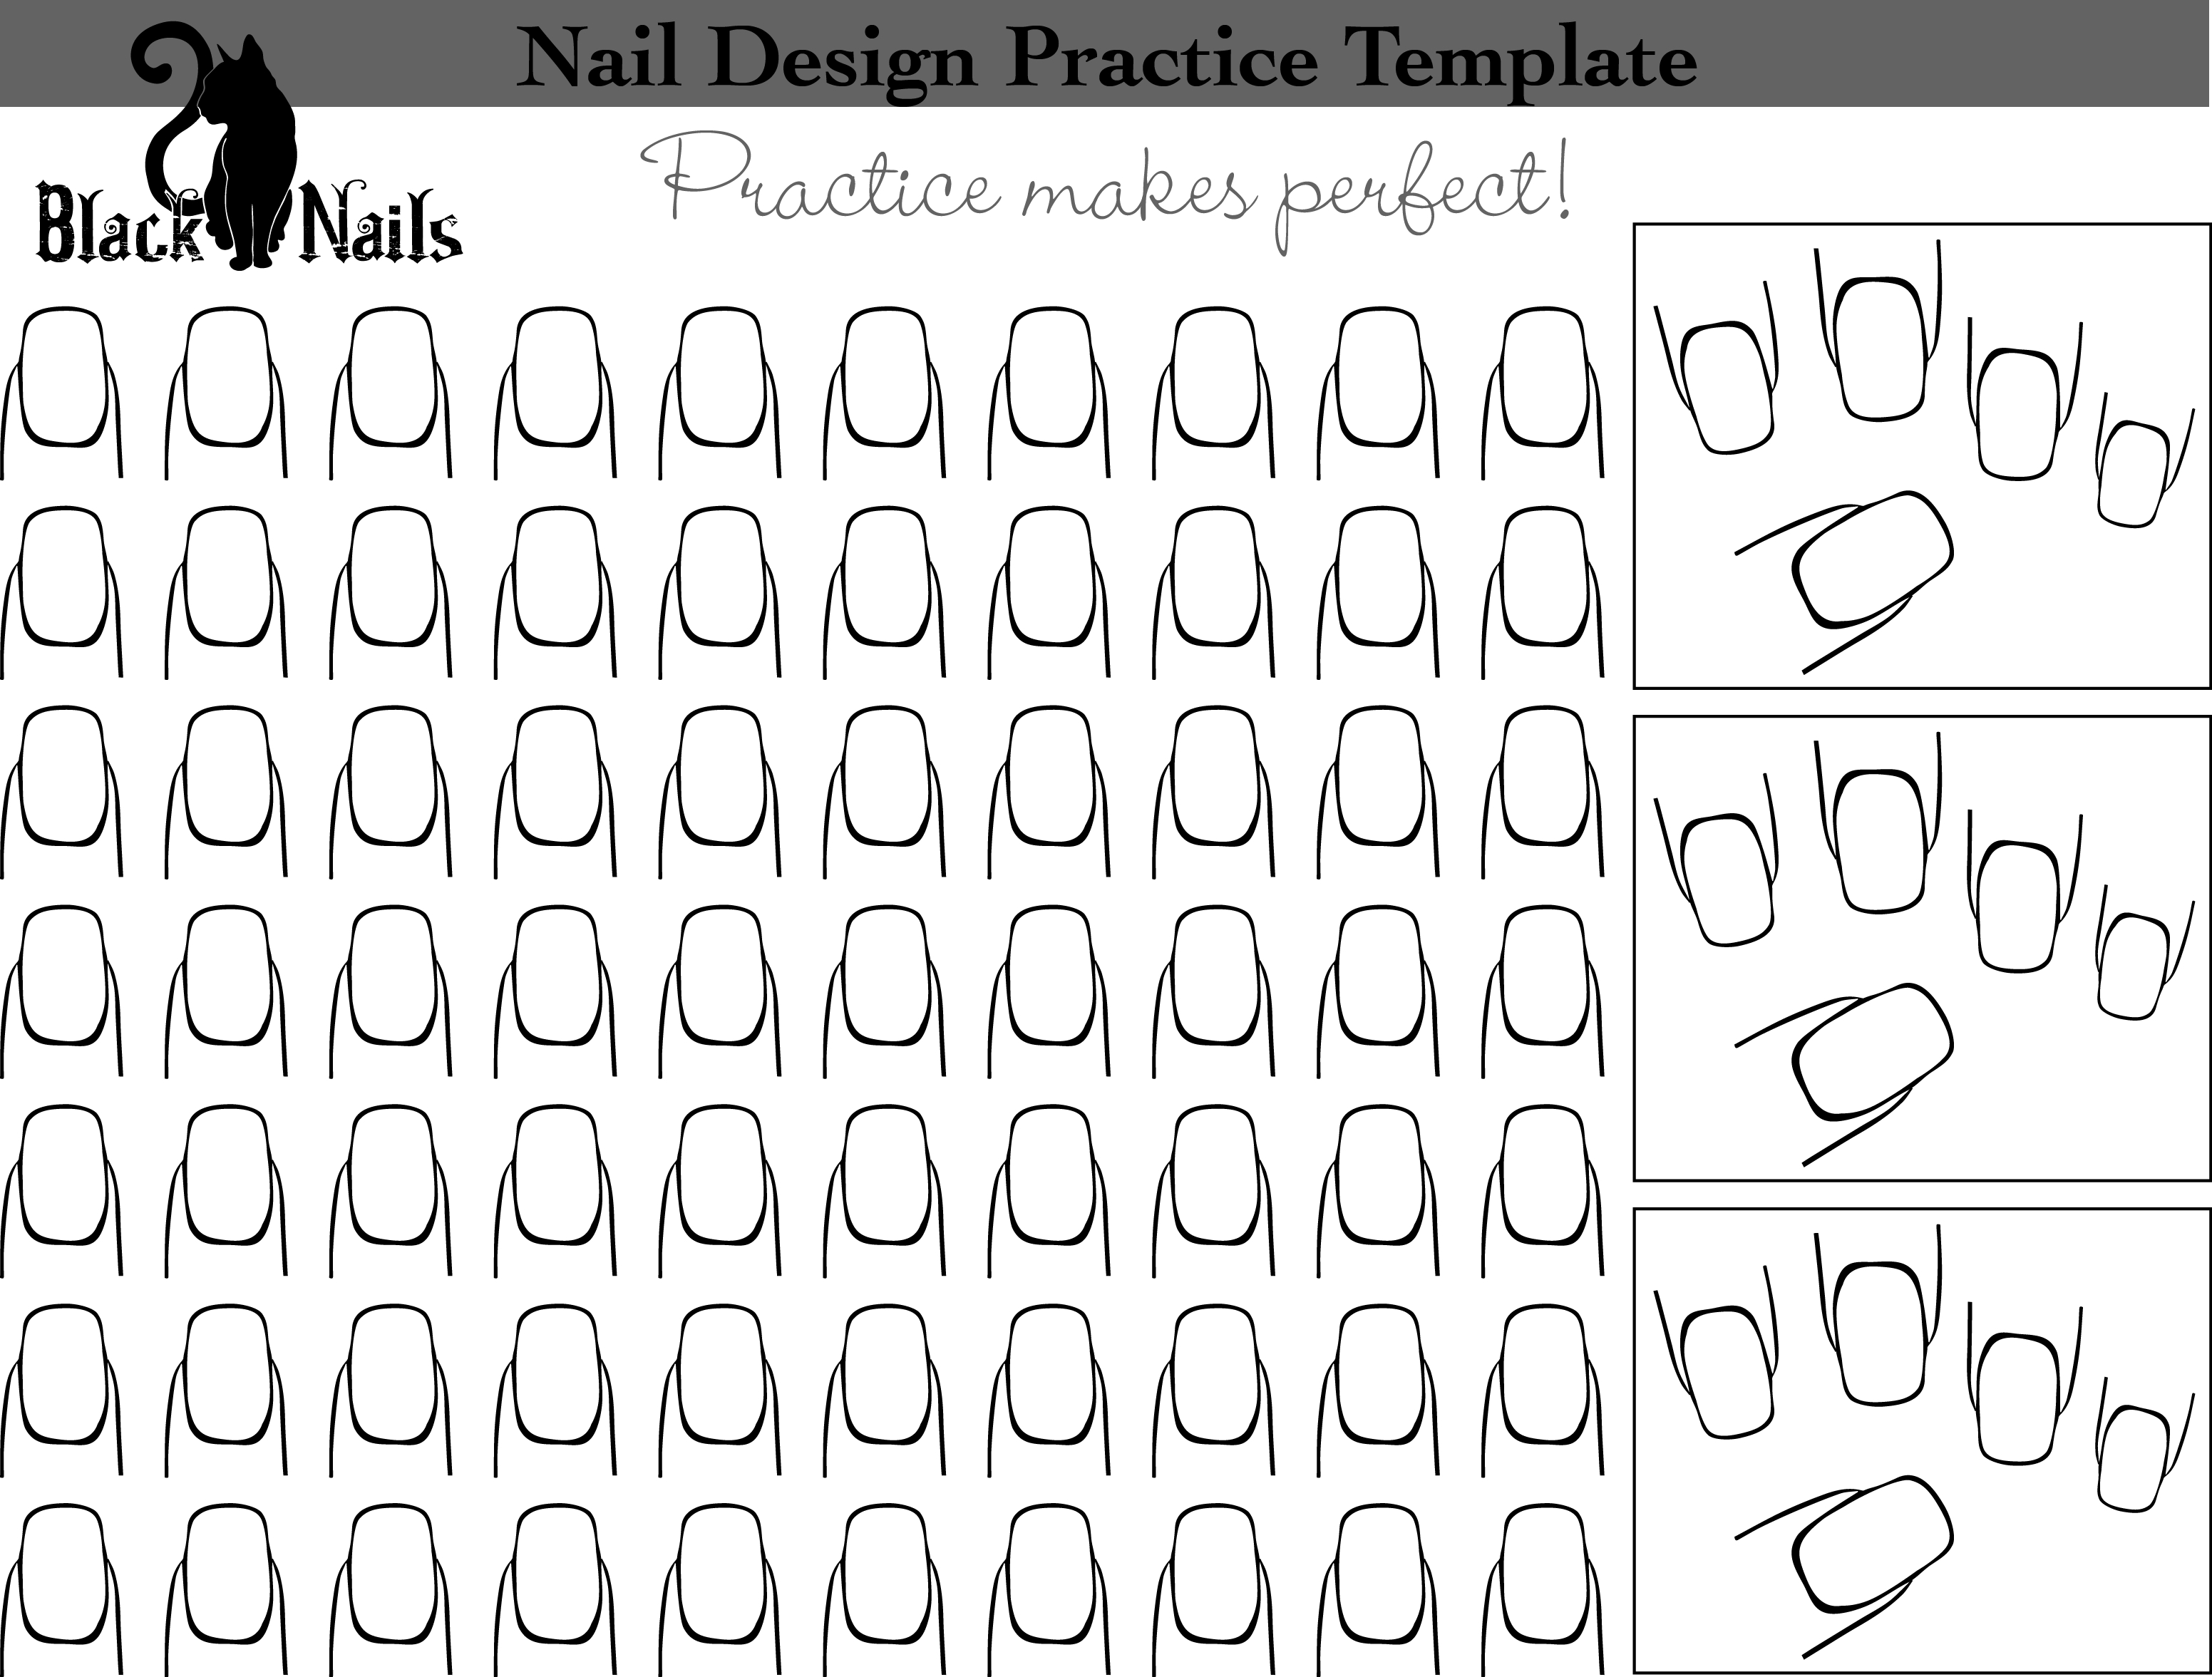 9. Nail Art Design Kit - wide 1